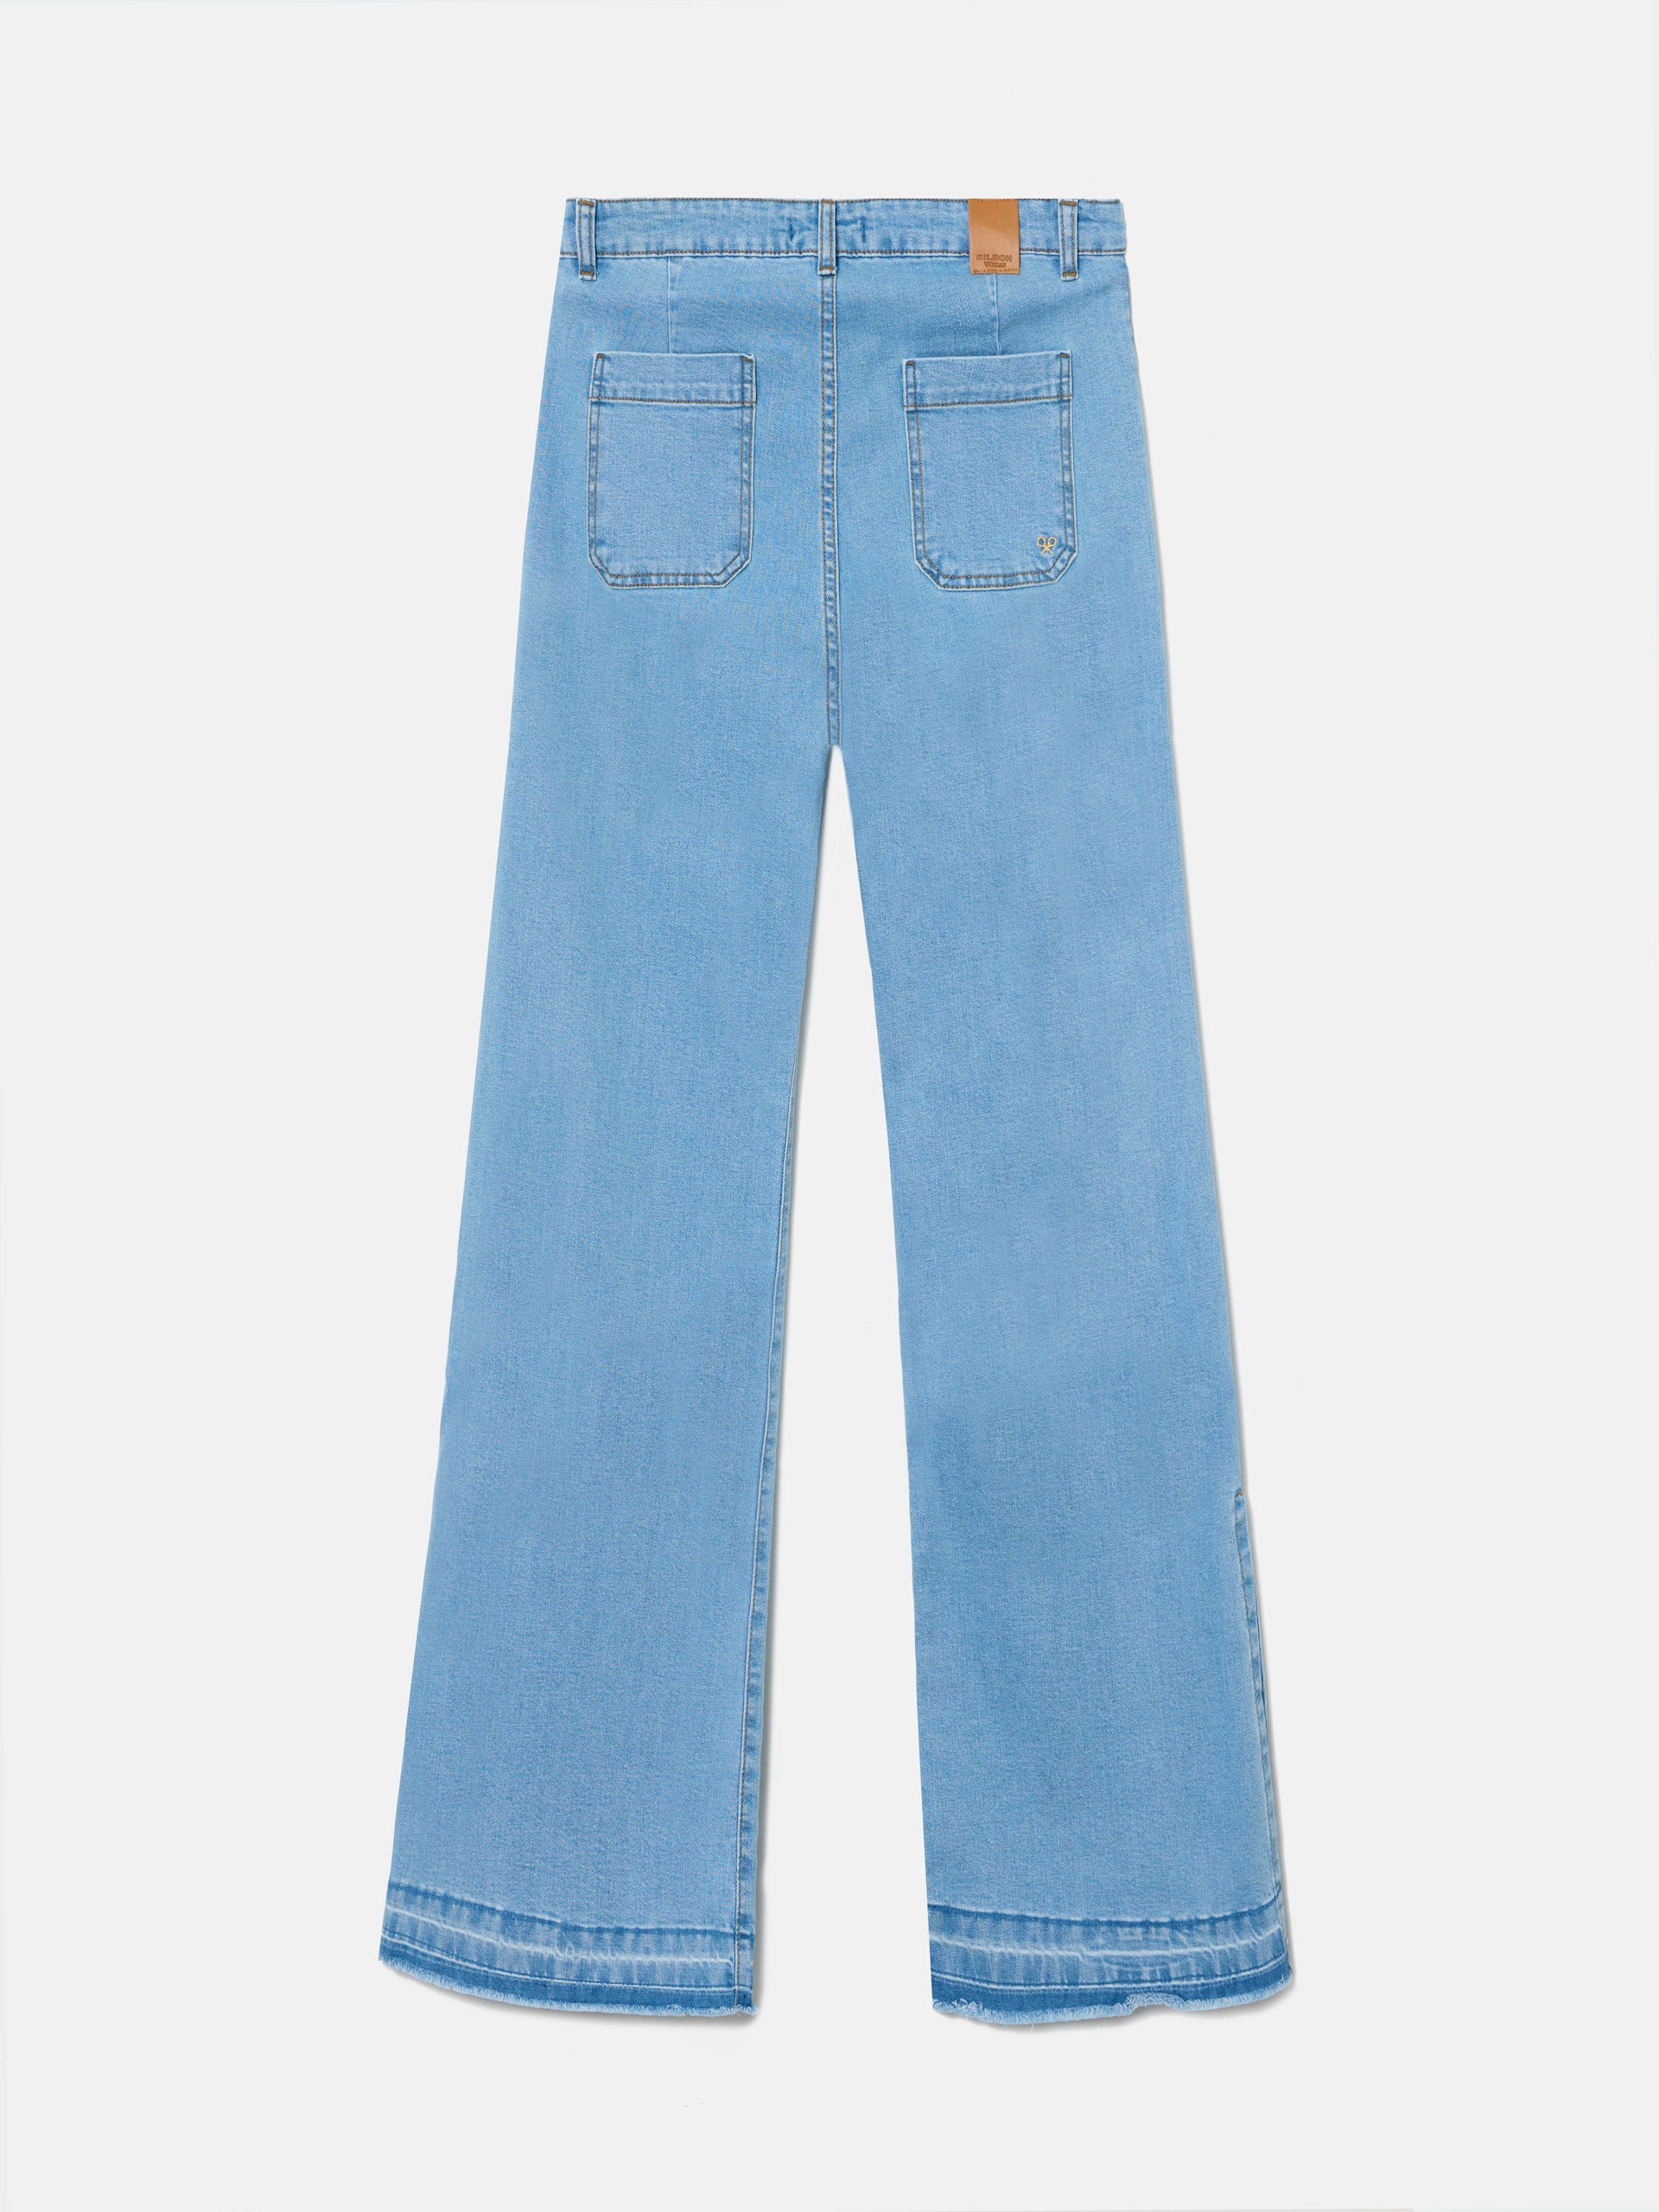 Navy blue pocket culotte pants